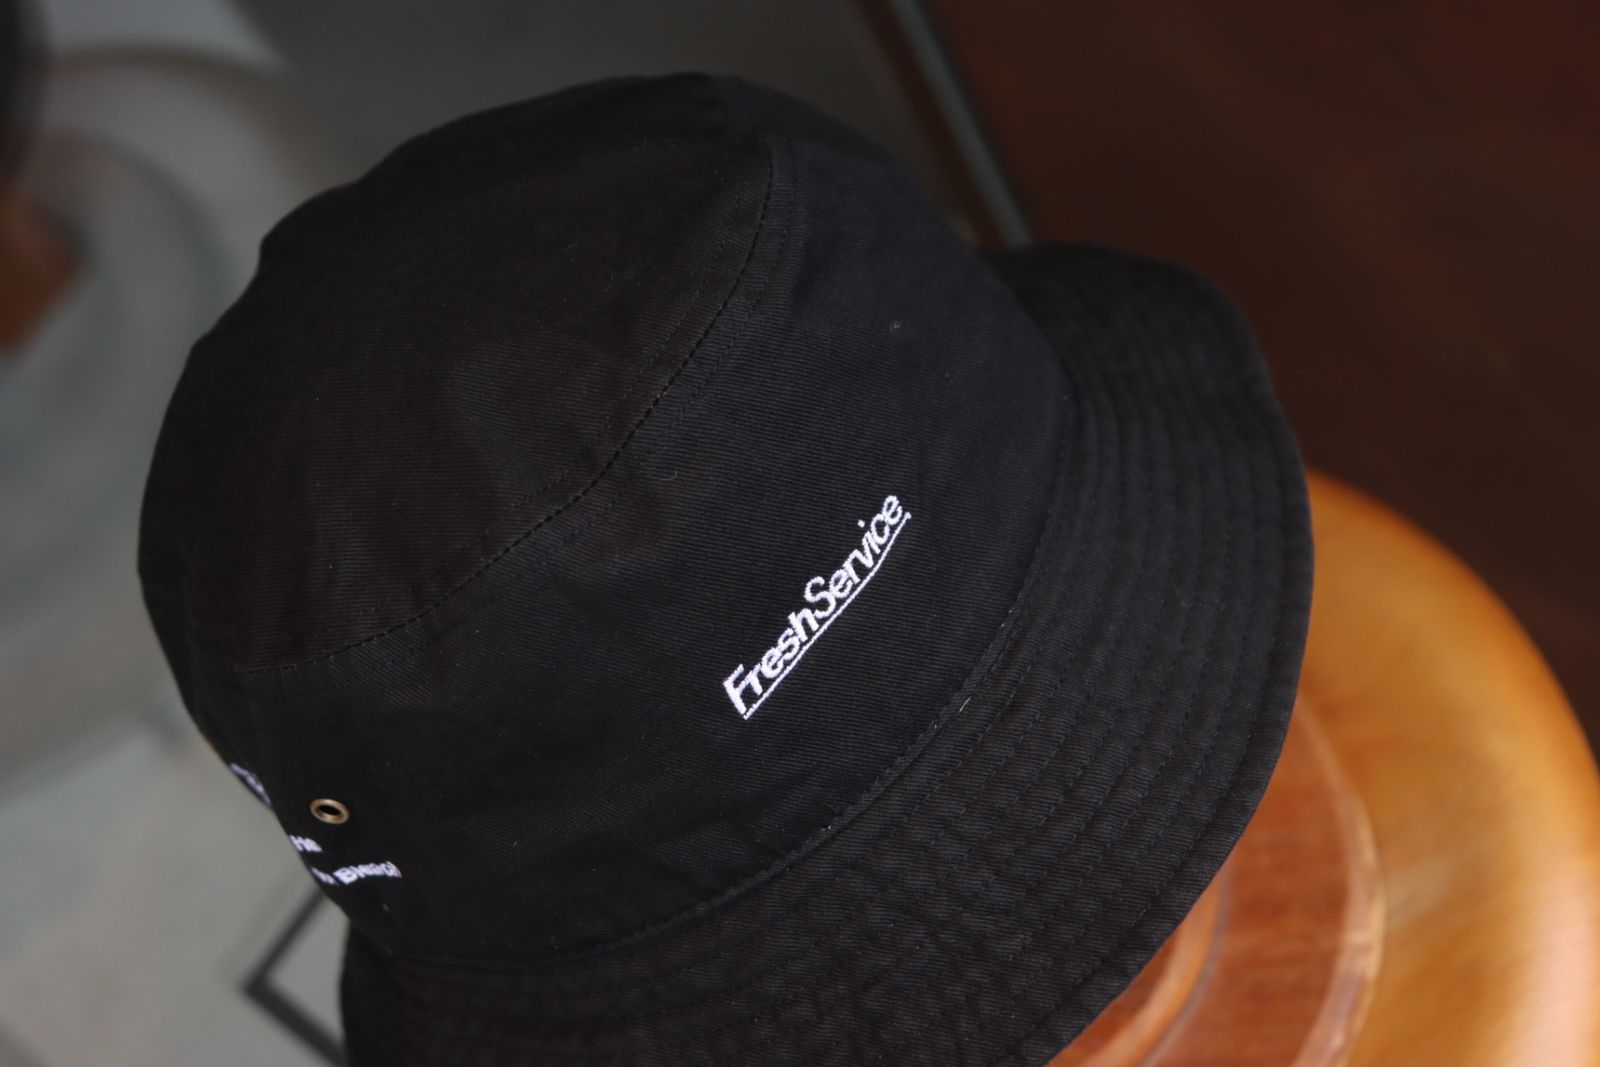 FreshService - フレッシュサービス 24SS CORPORATE BUCKET HAT(BLACK 